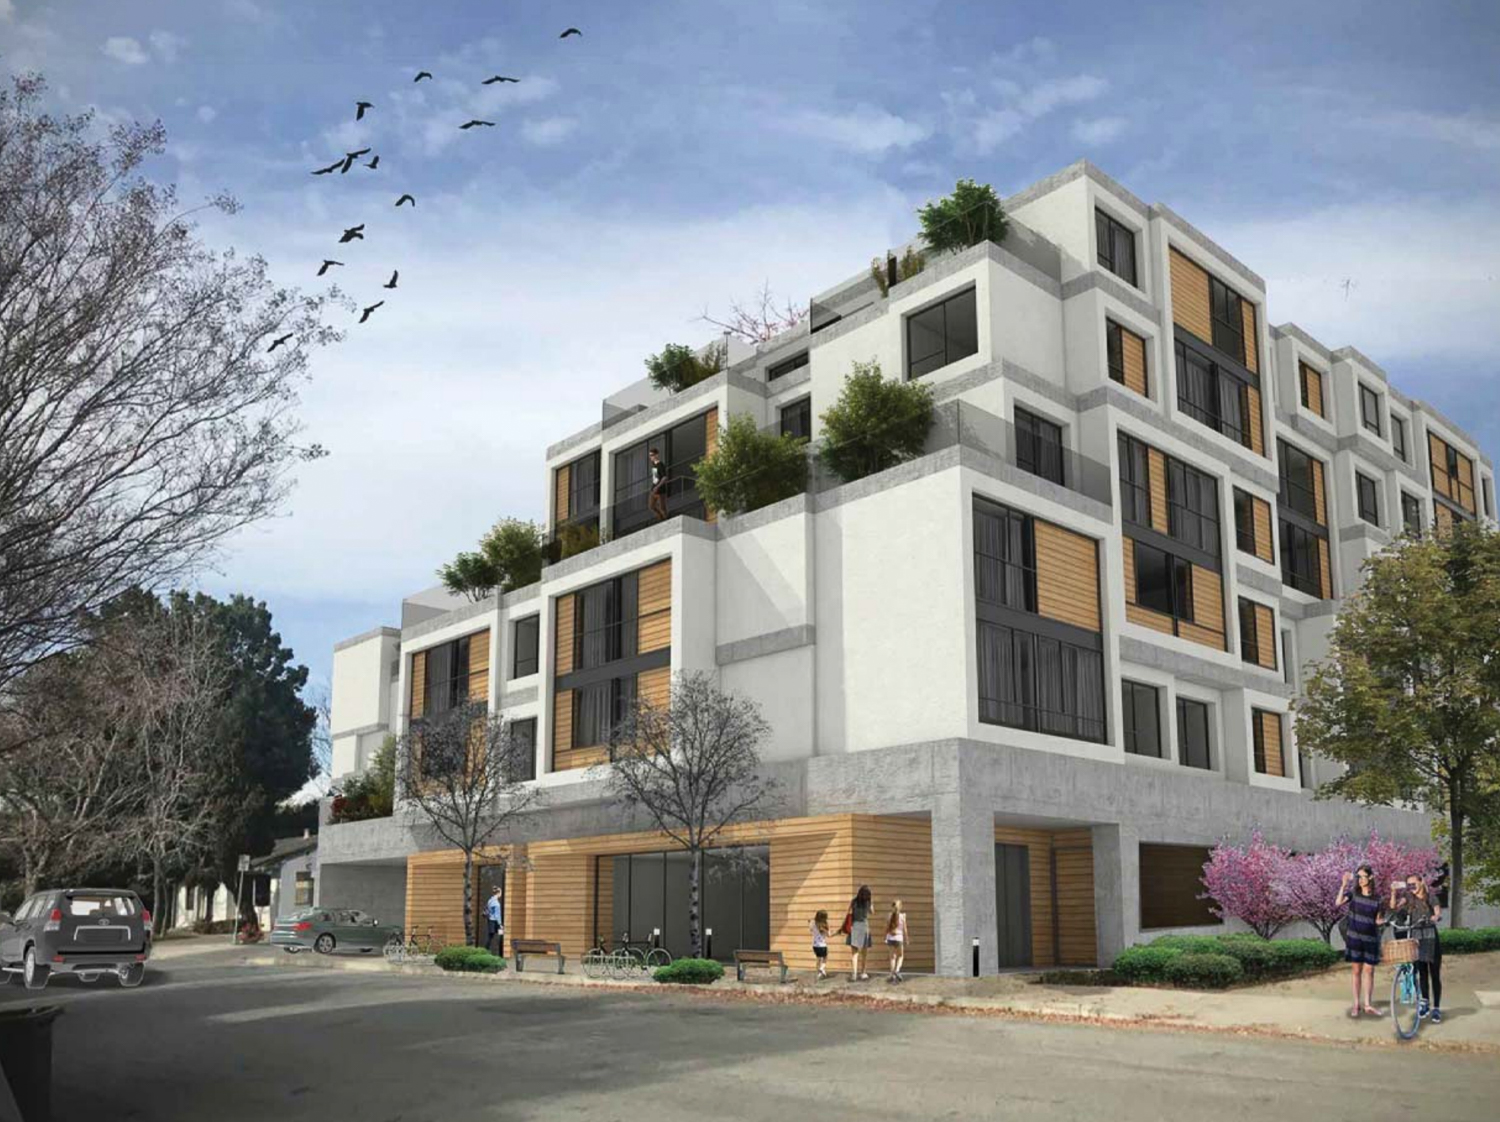 2881 Hemlock Avenue proposal, rendering by Carpira Design Group